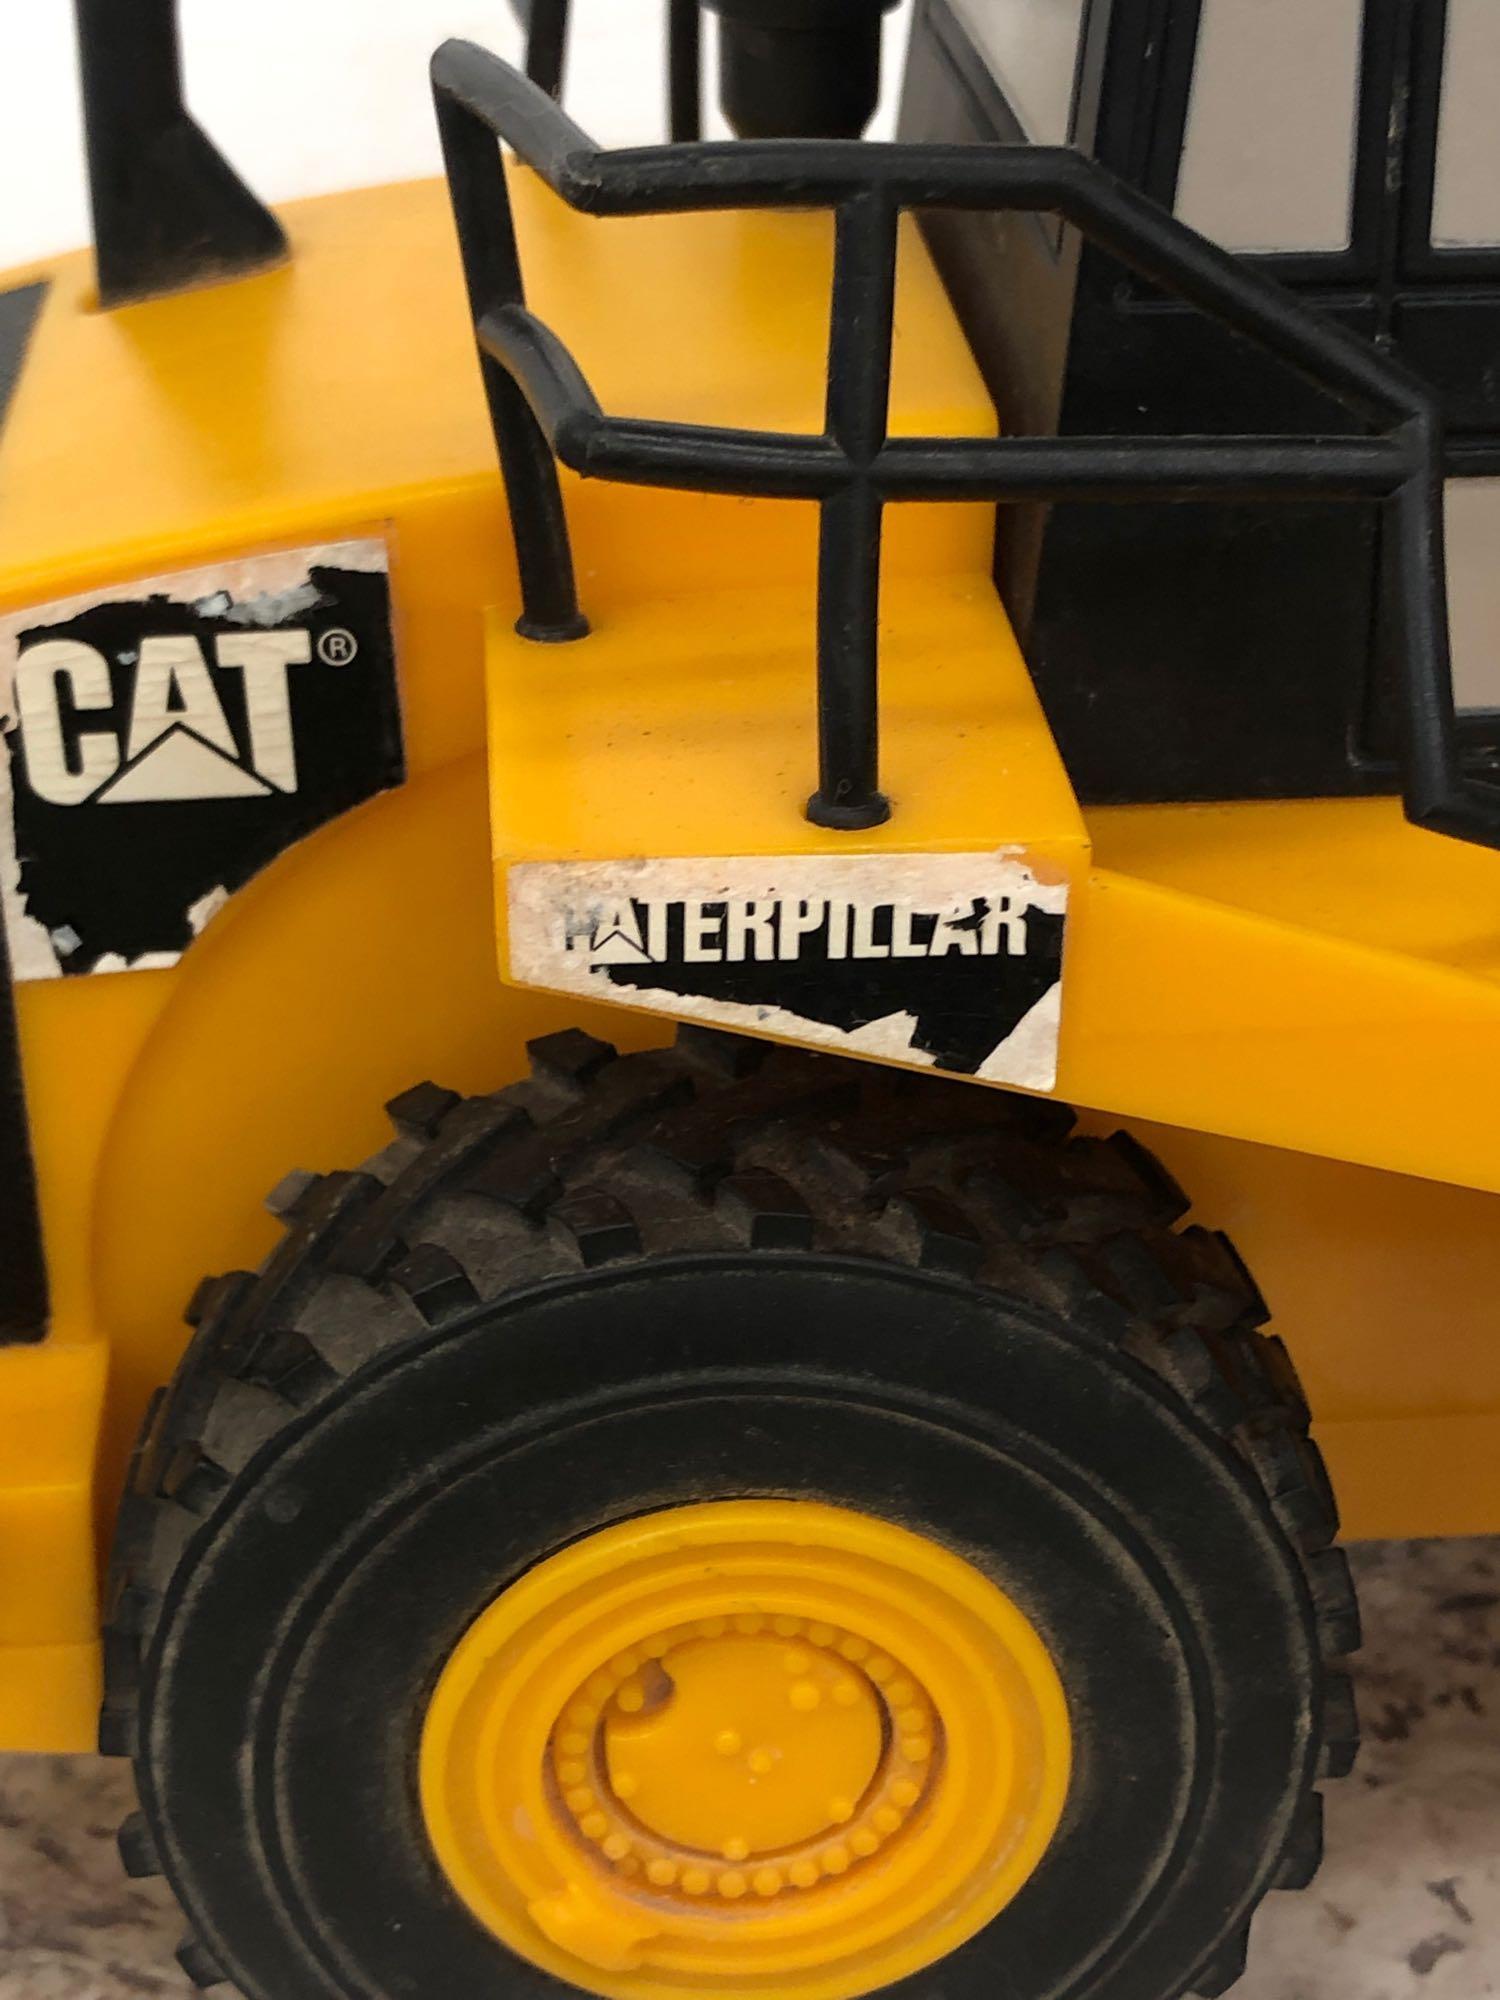 CAT Caterpillar battery operated bulldozer